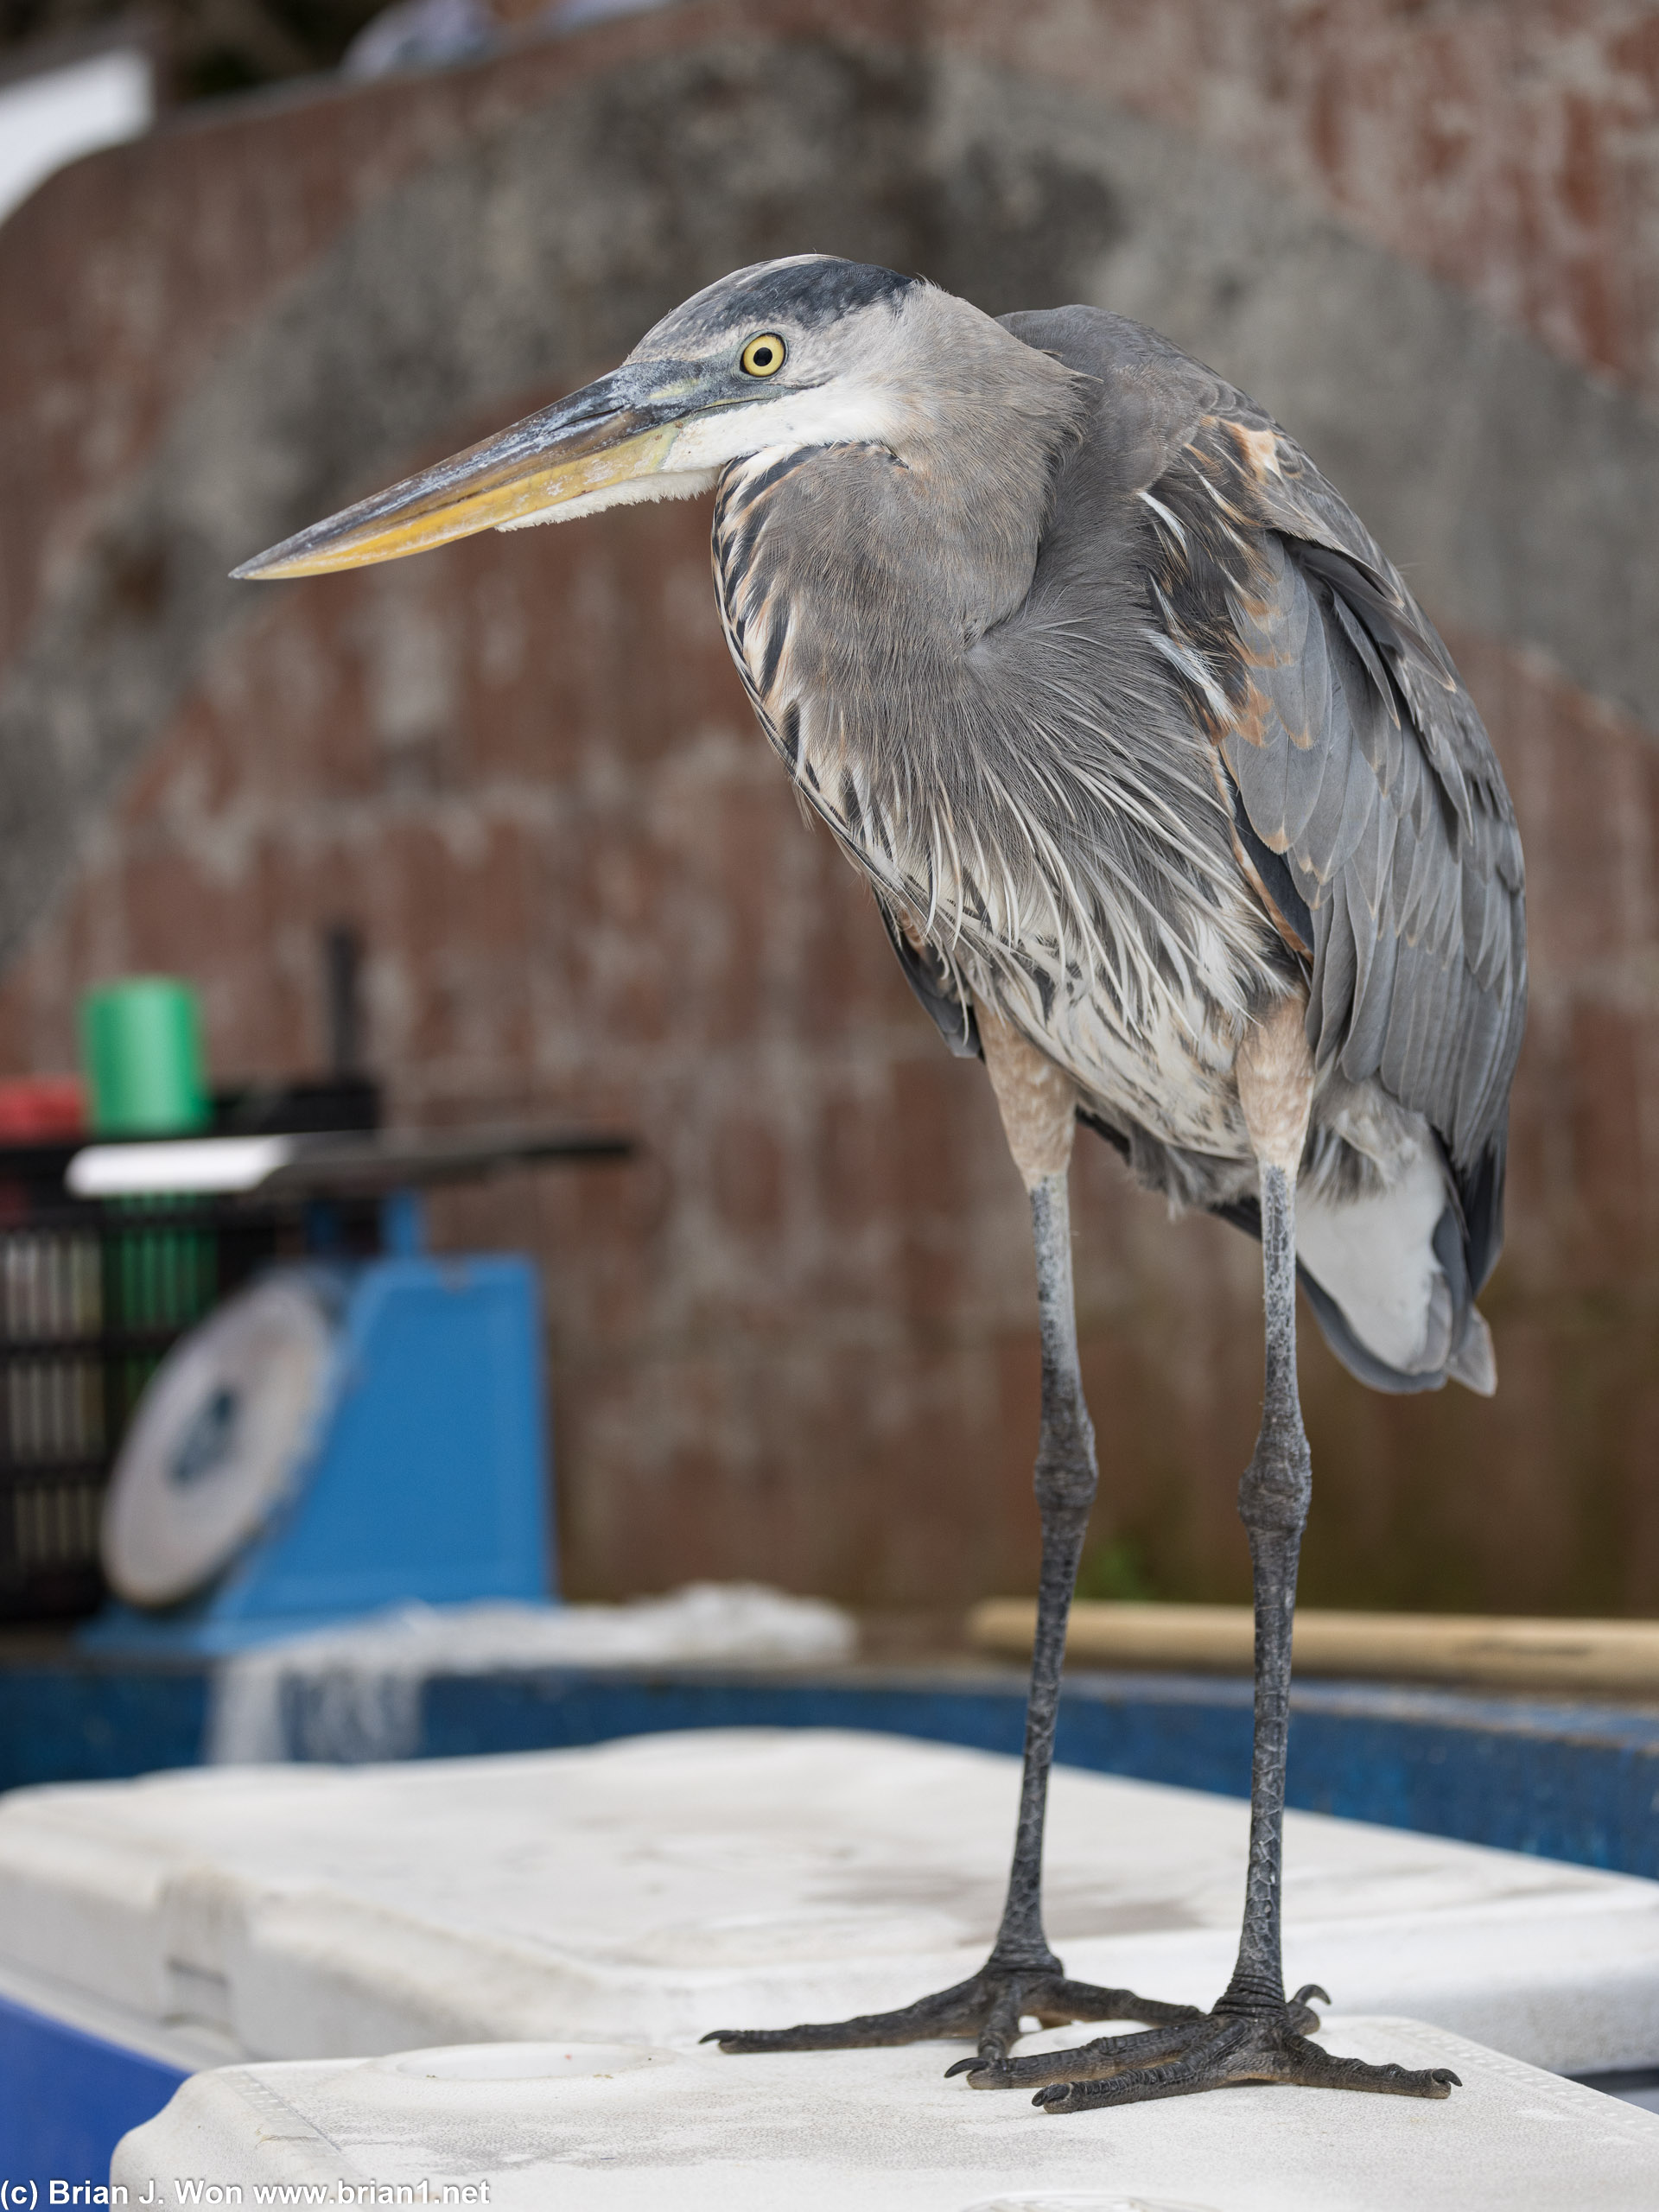 Great blue heron waiting to harass the fishmonger.